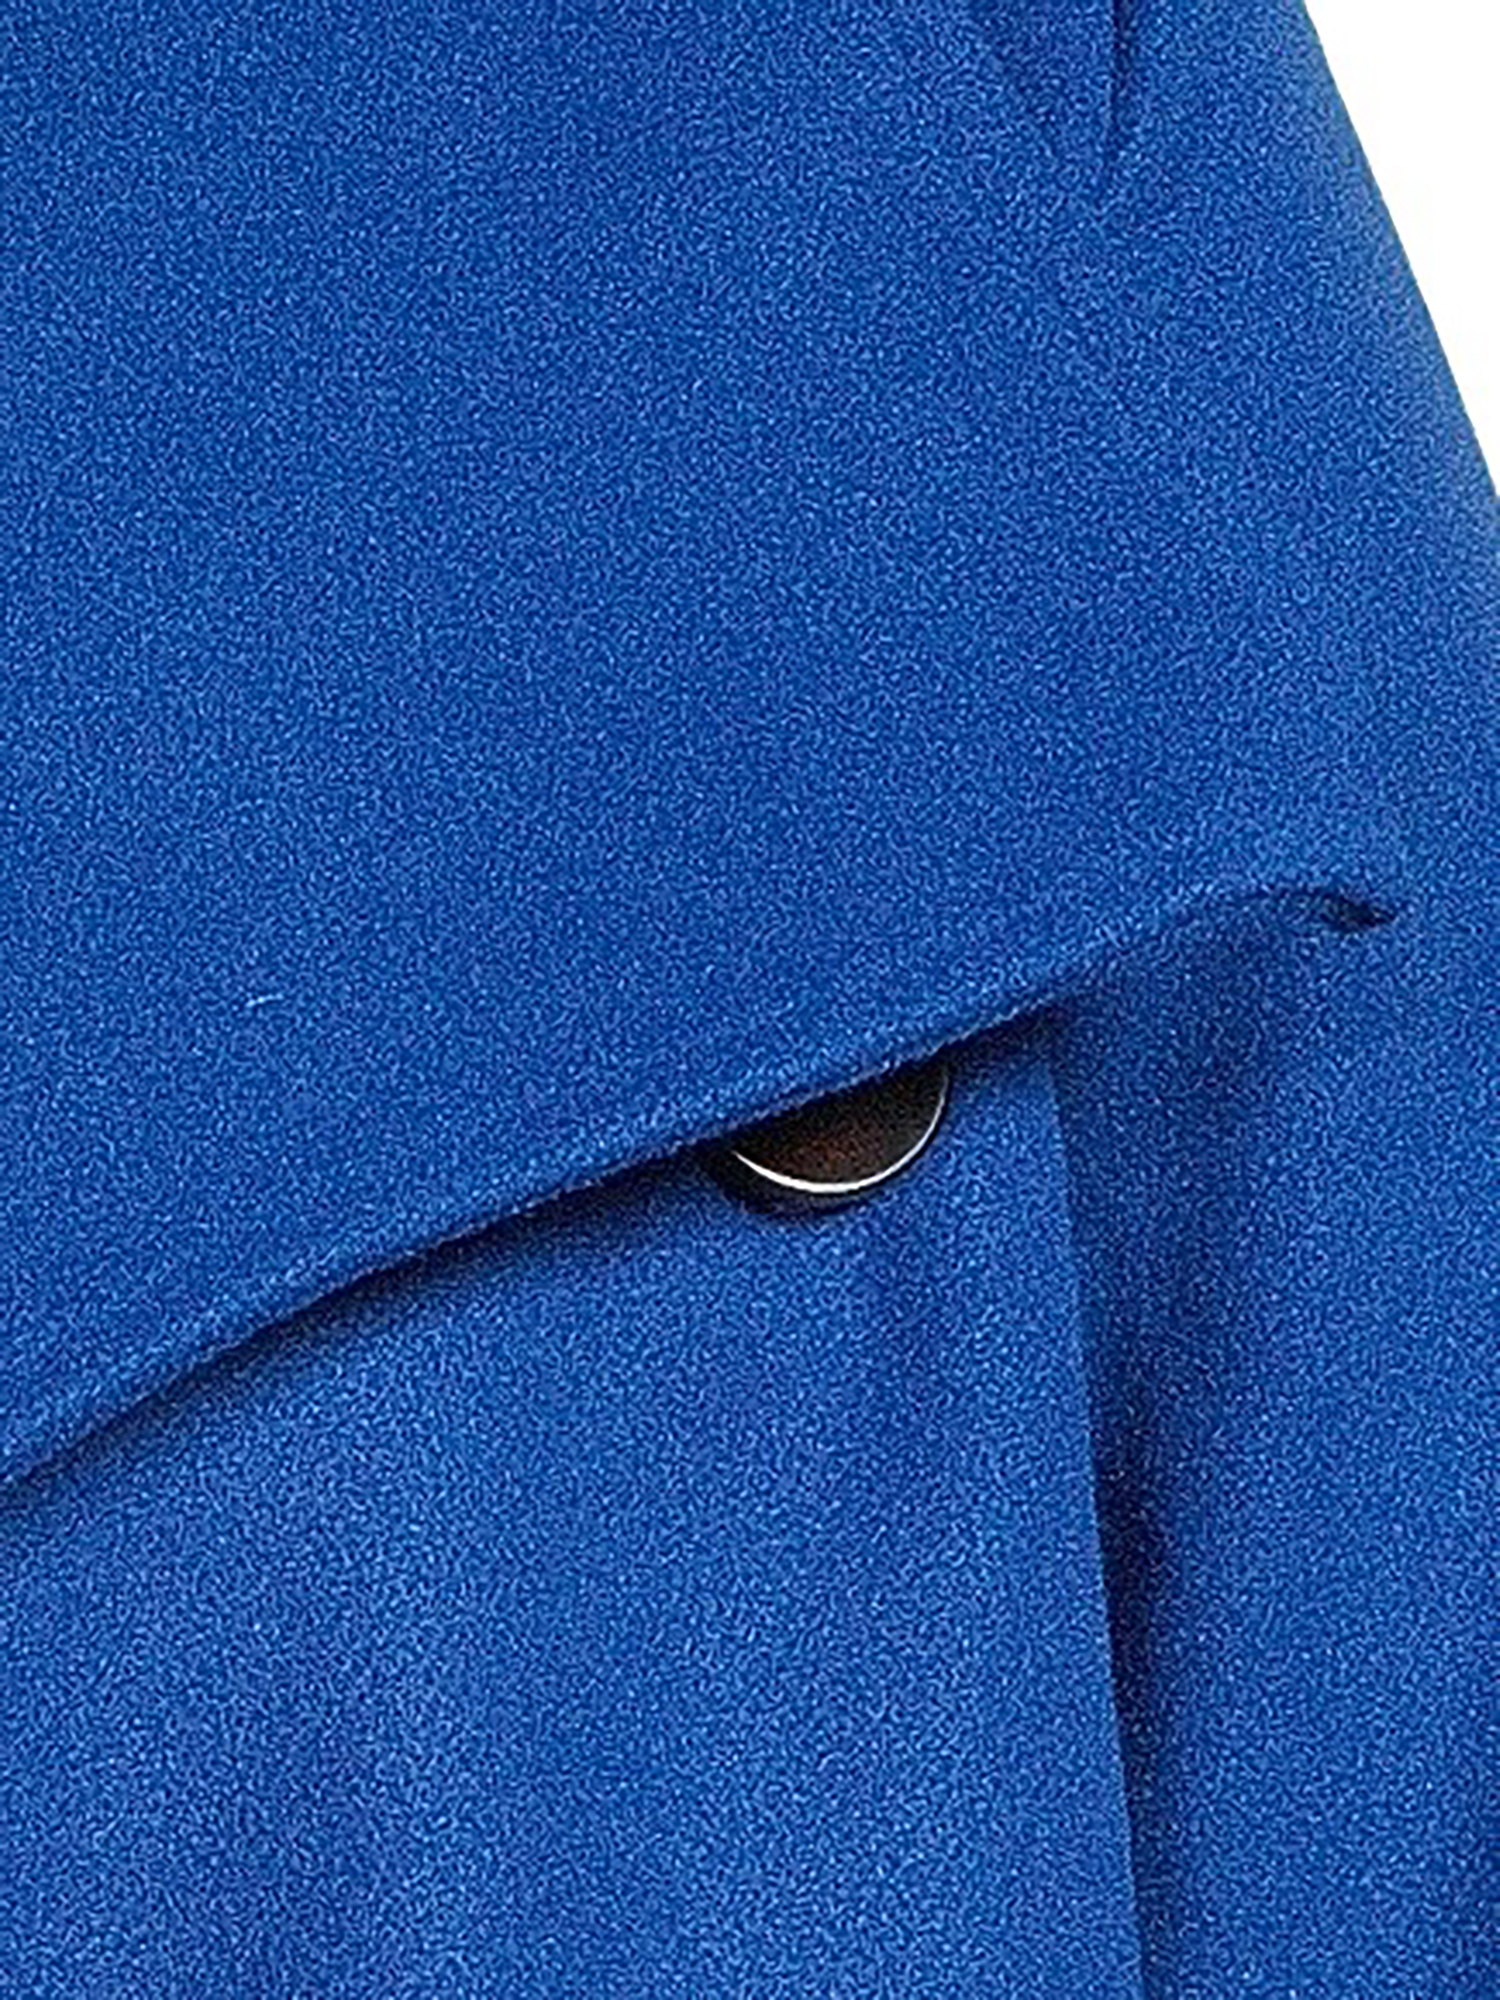 Mark Alan Women's Plus Size Asymmetrical Belted Wrap Coat - image 2 of 5